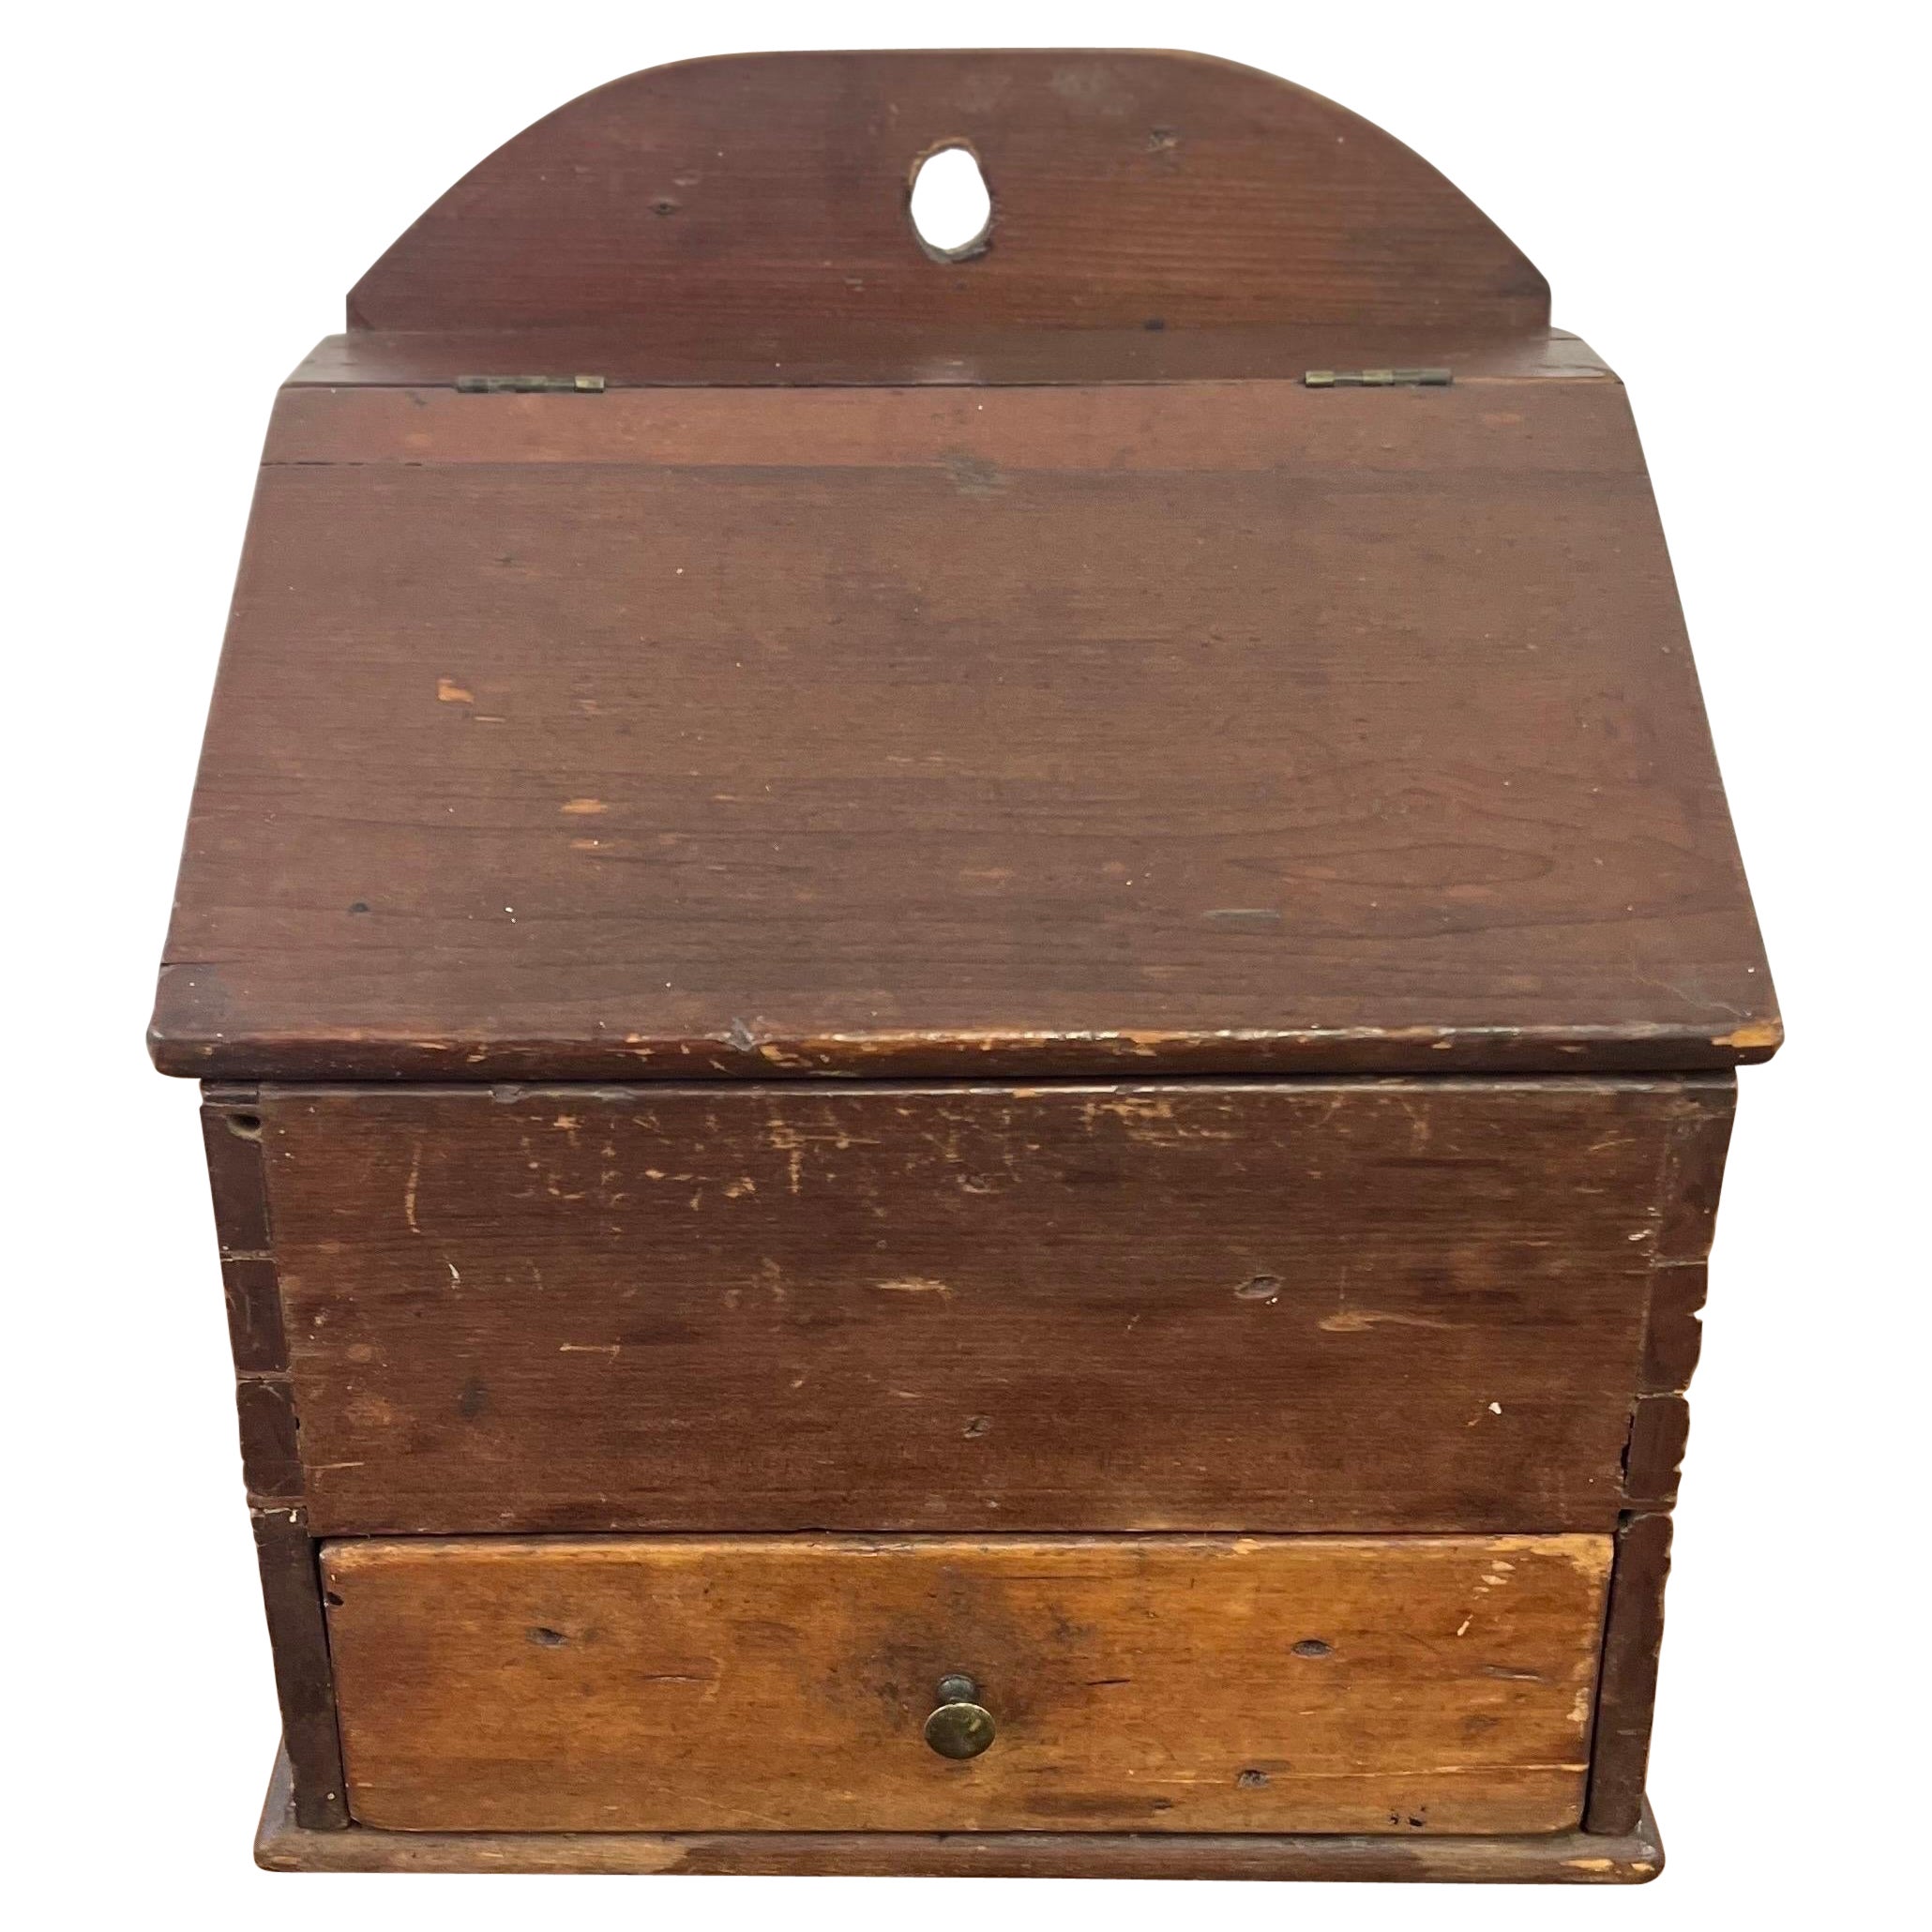 Antique American Table Top Shaker Spice Box circa 1800’s